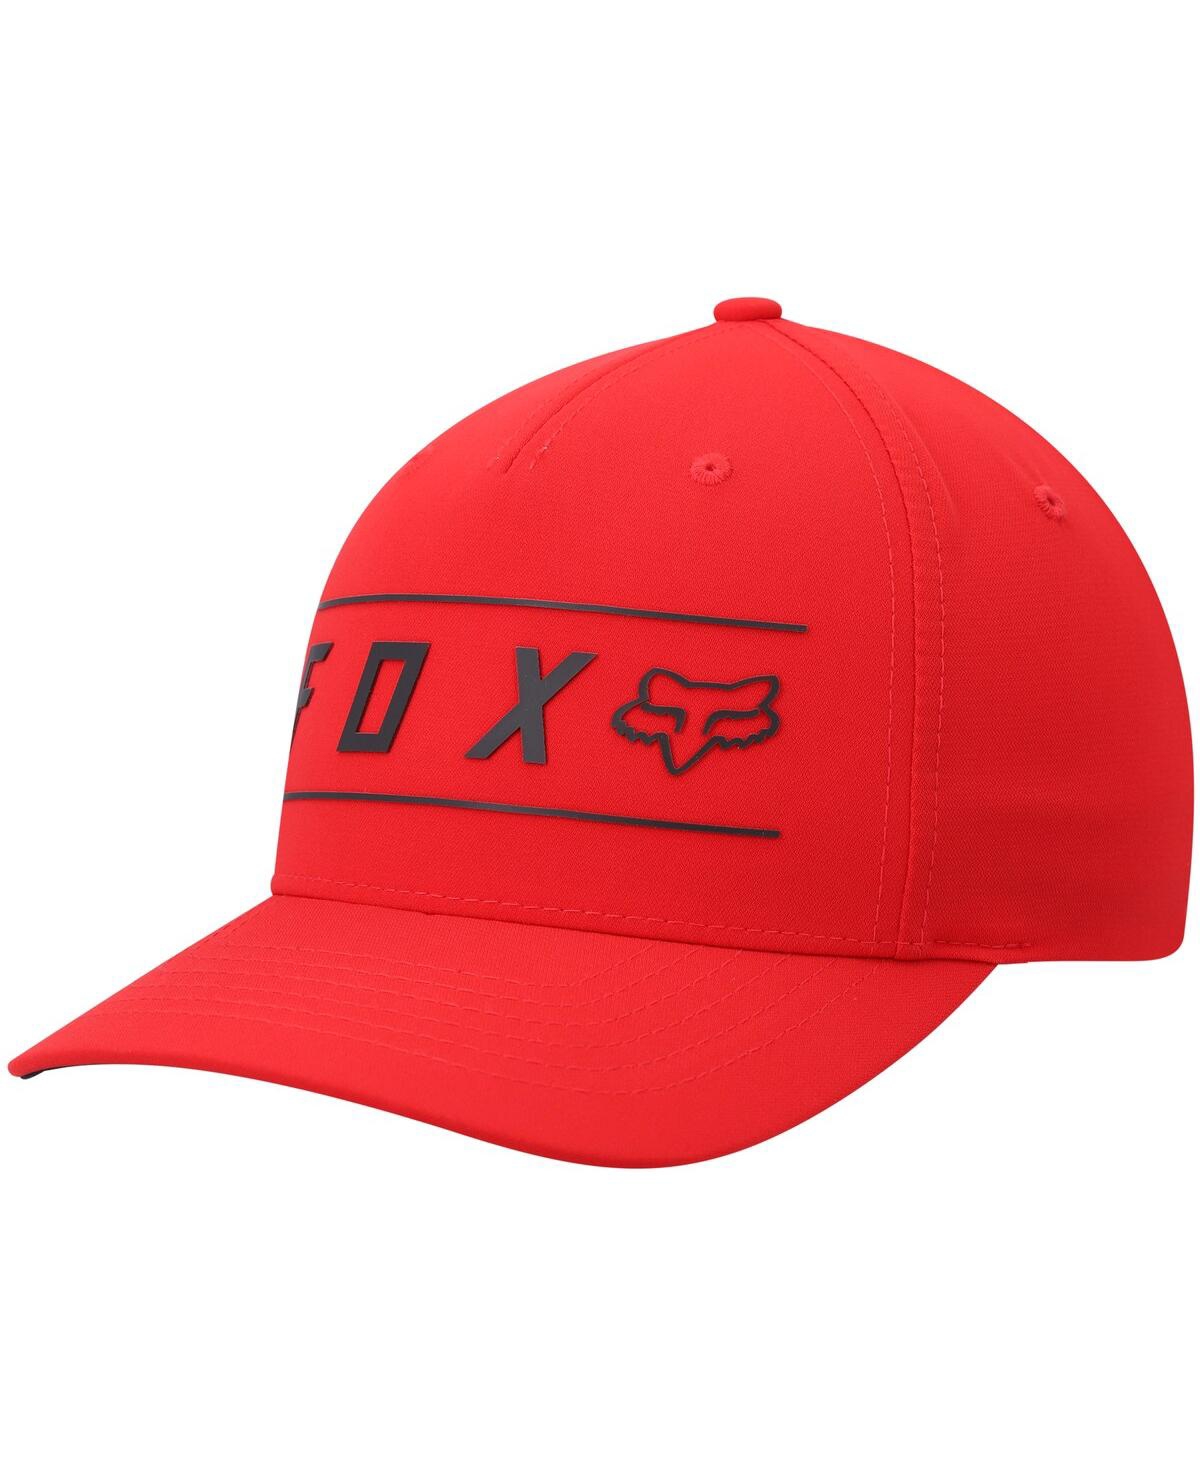 Men's Fox Red Pinnacle Tech Flex Hat - Red